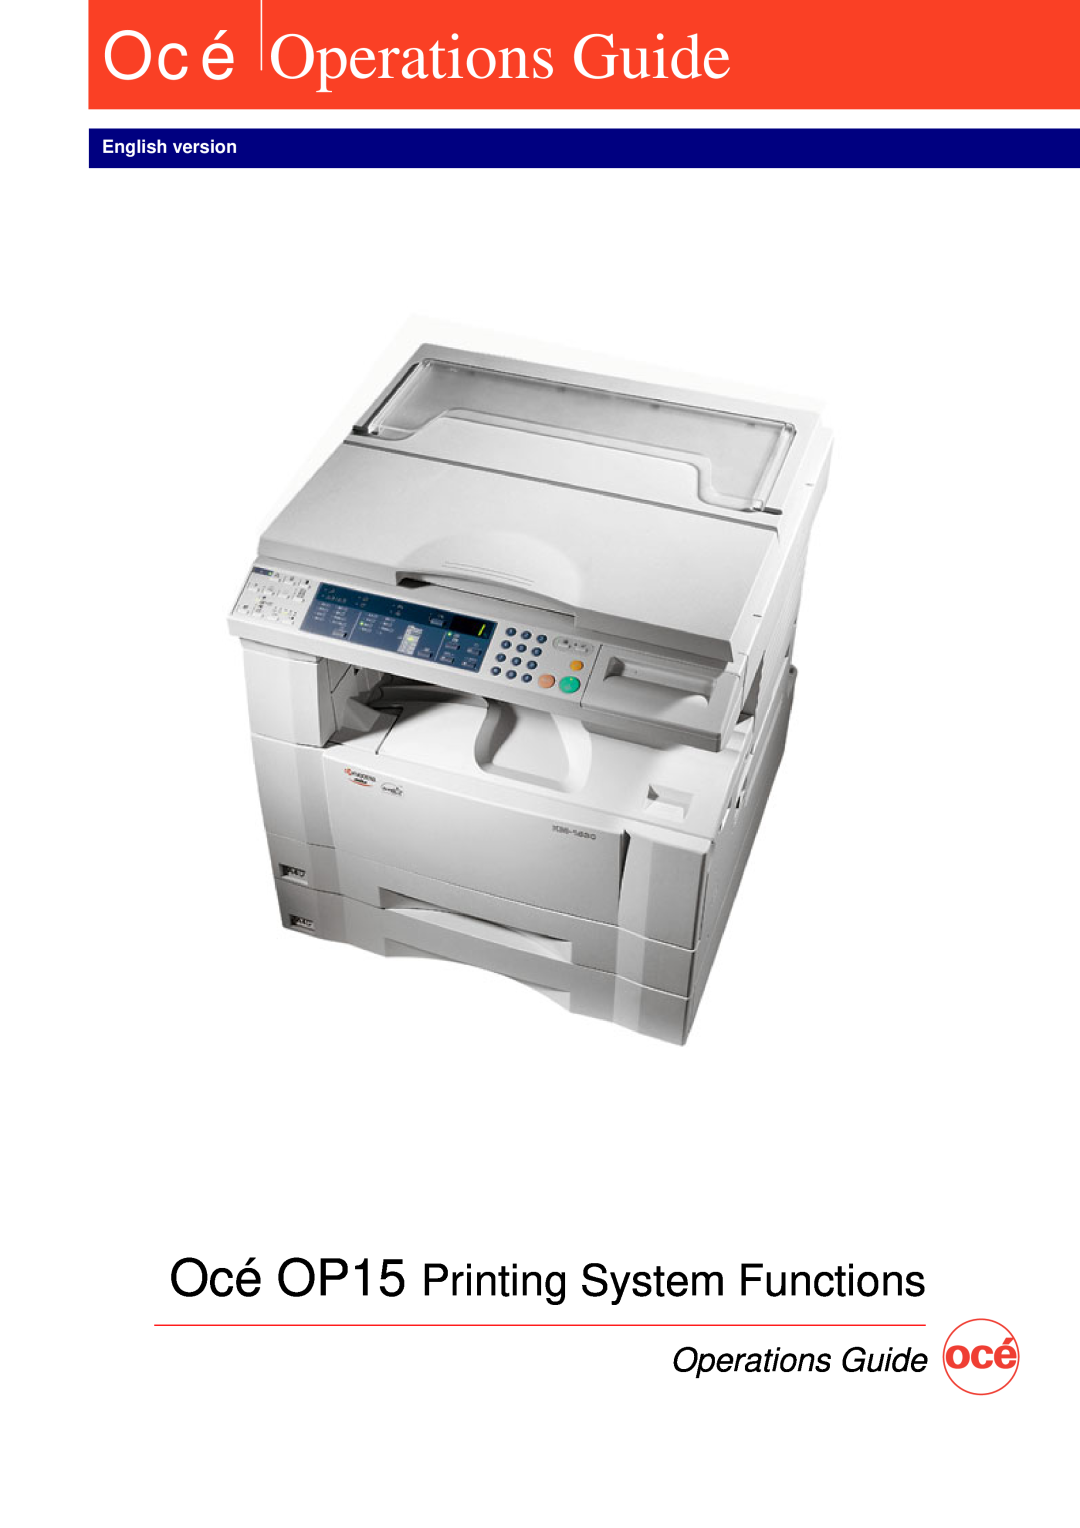 IBM manual Océ Operations Guide, Océ OP15 Printing System Functions, English version 